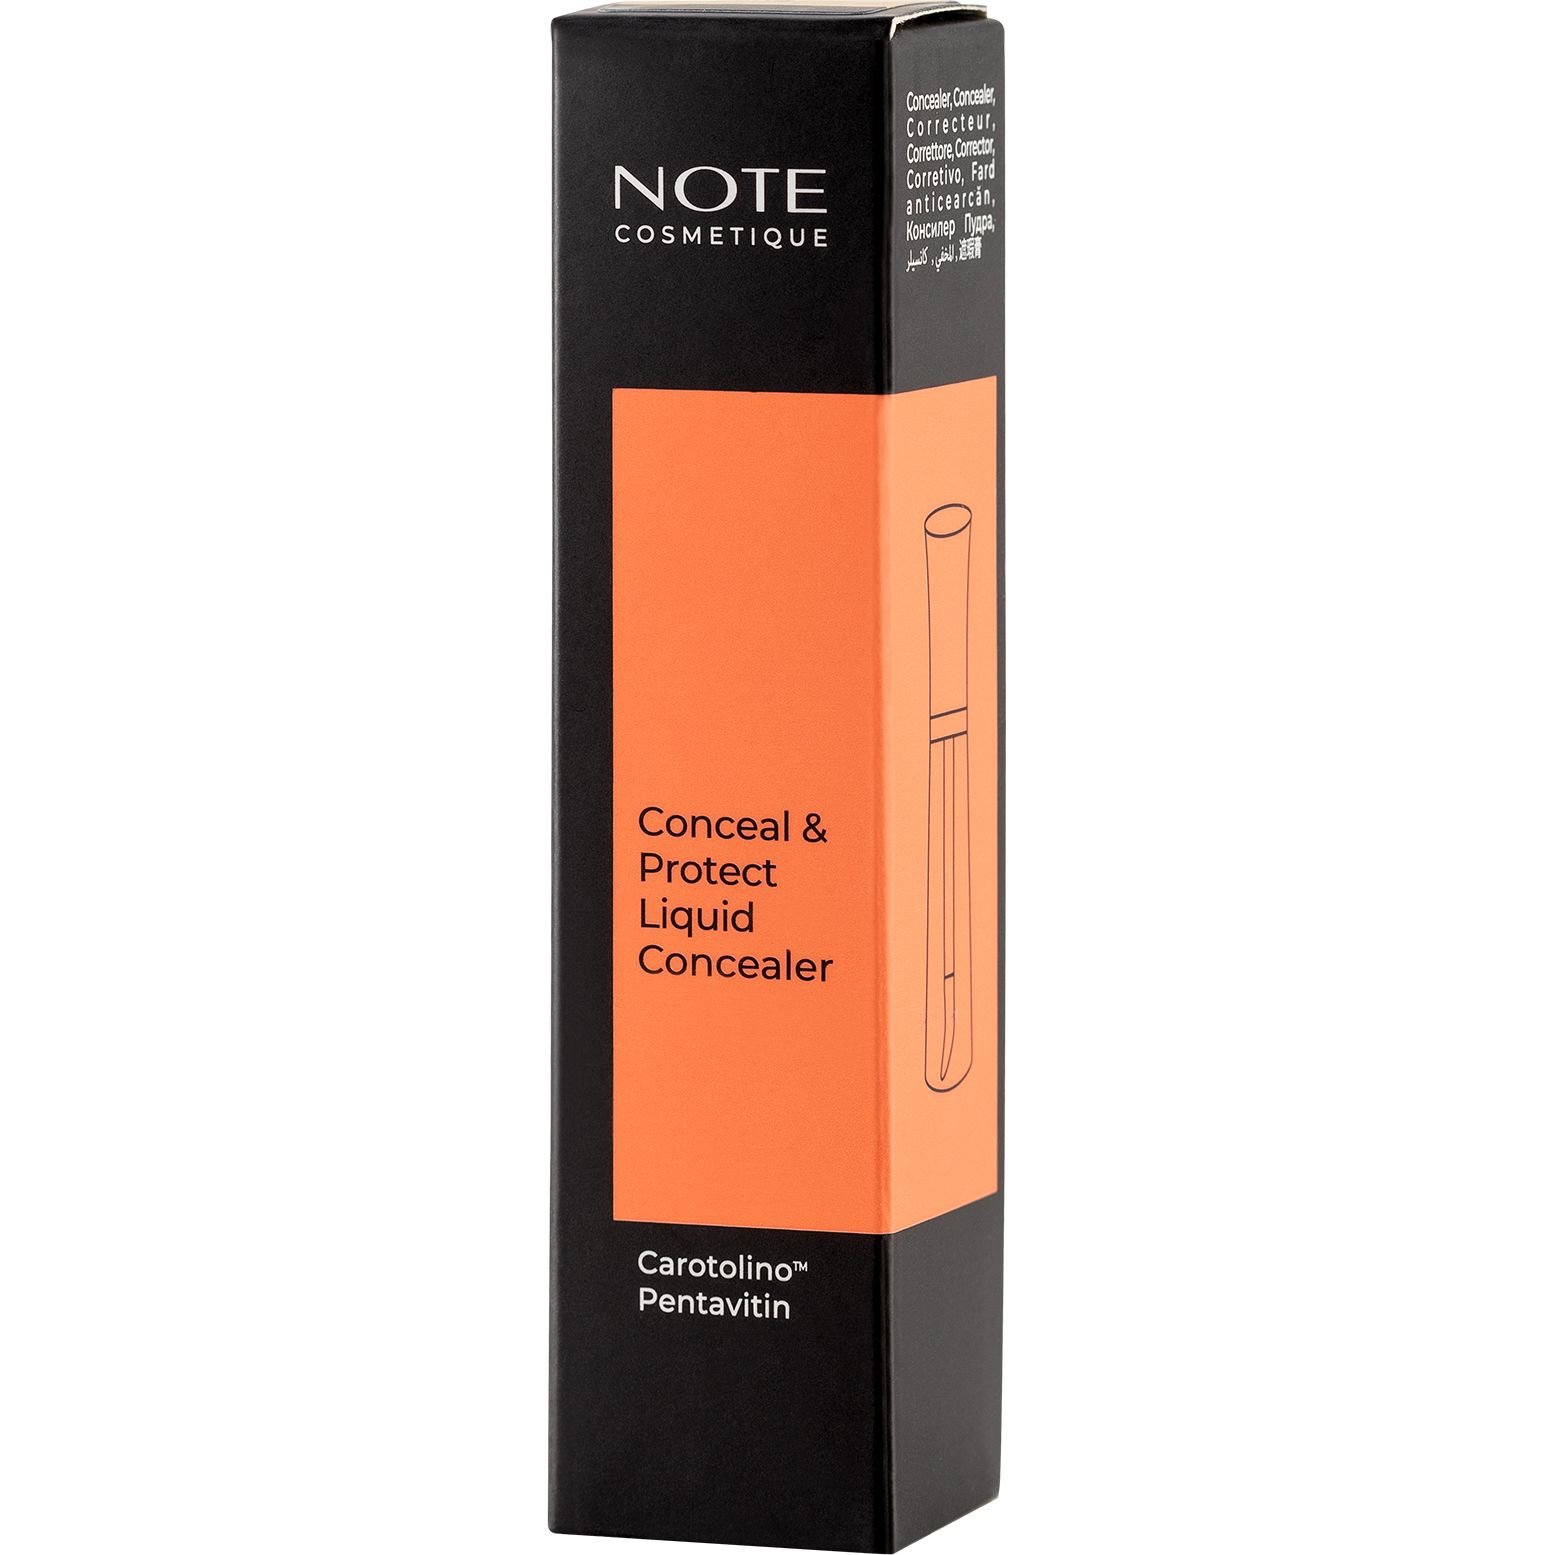 Рідкий консилер Note Cosmetique Conceal & Protect Liquid Concealer відтінок 01 (Light Sand) 4.5 мл - фото 6